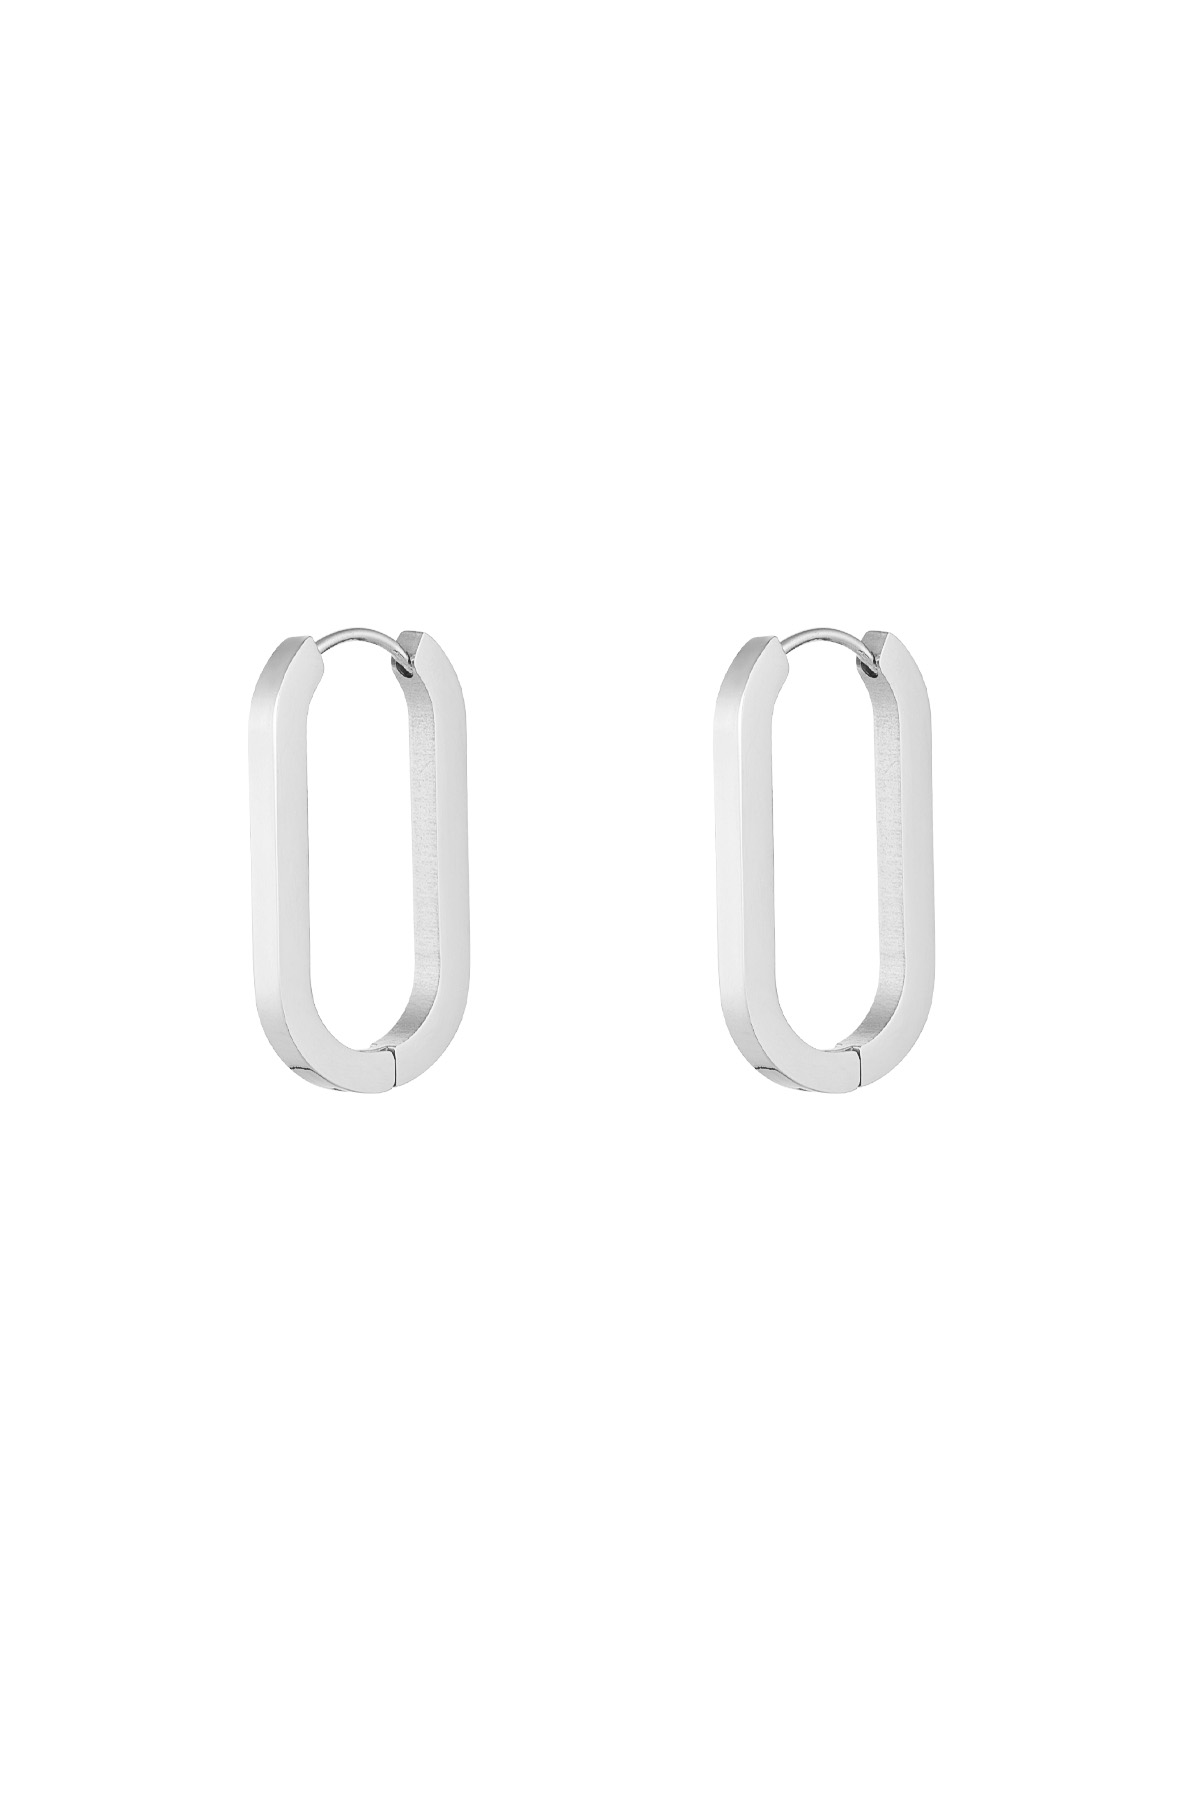 Basic oval earrings large - silver